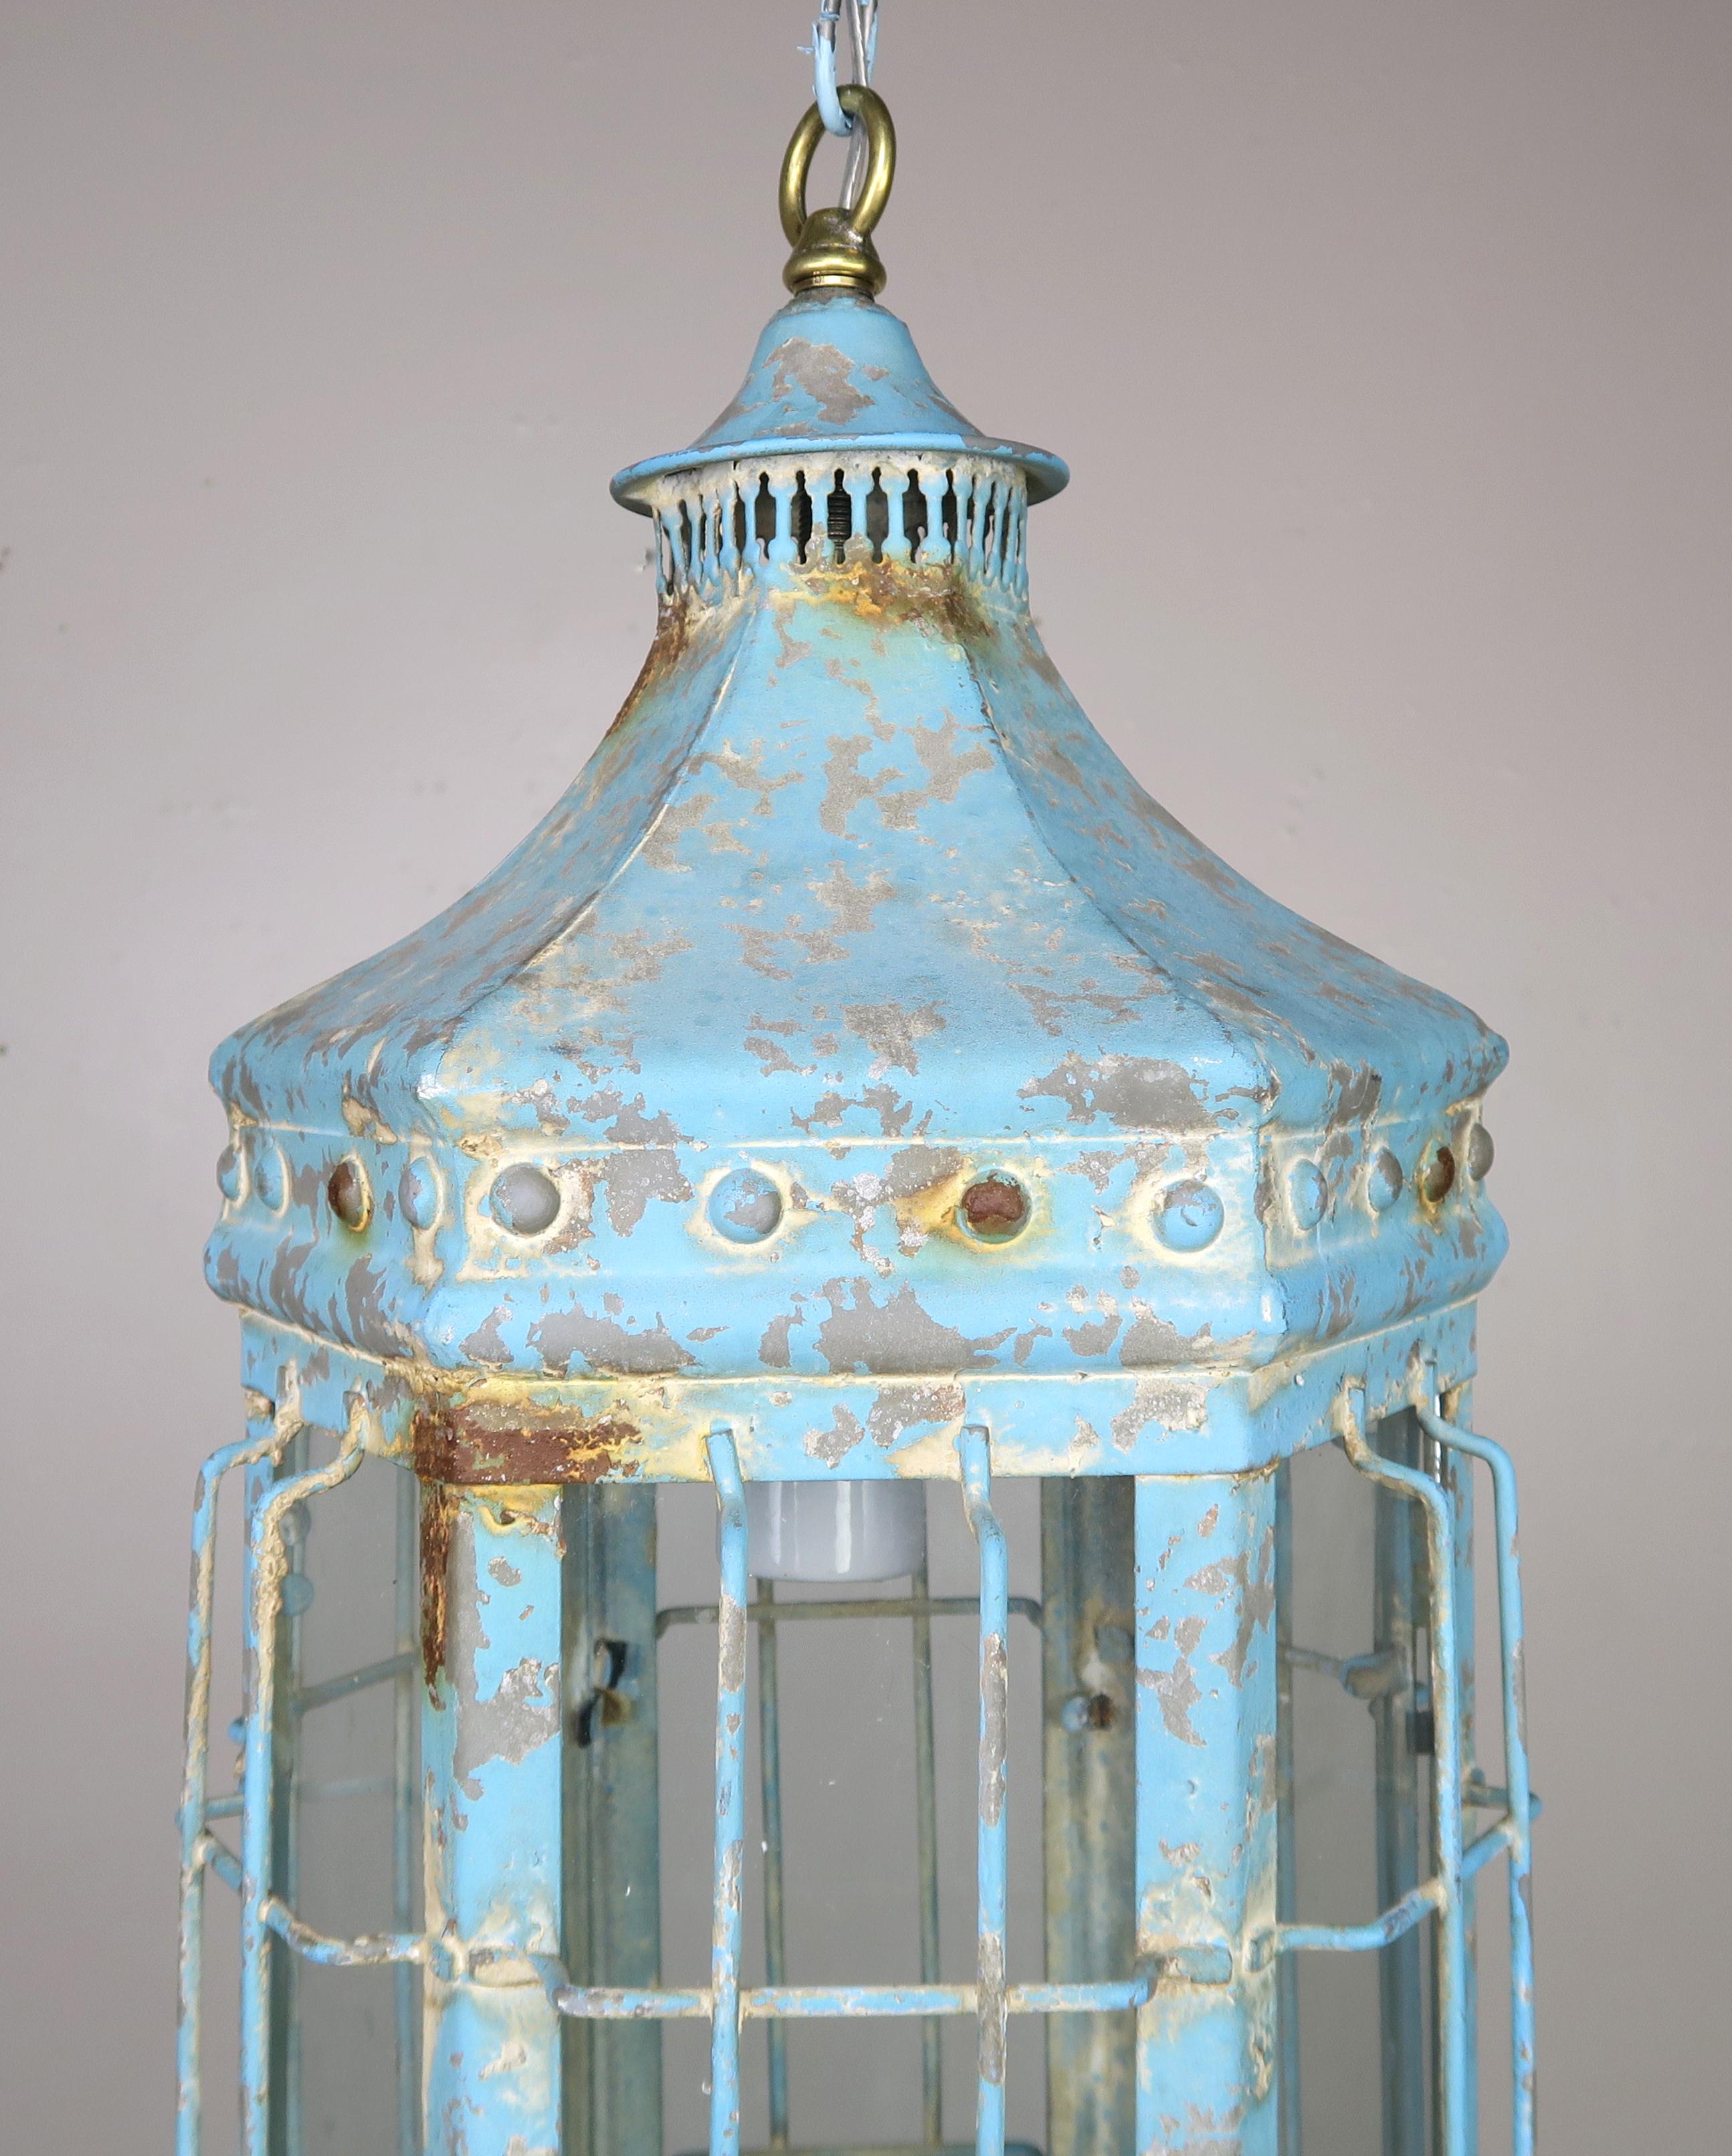 Metal Blue Painted Pagoda Shaped Lantern with Original Glass